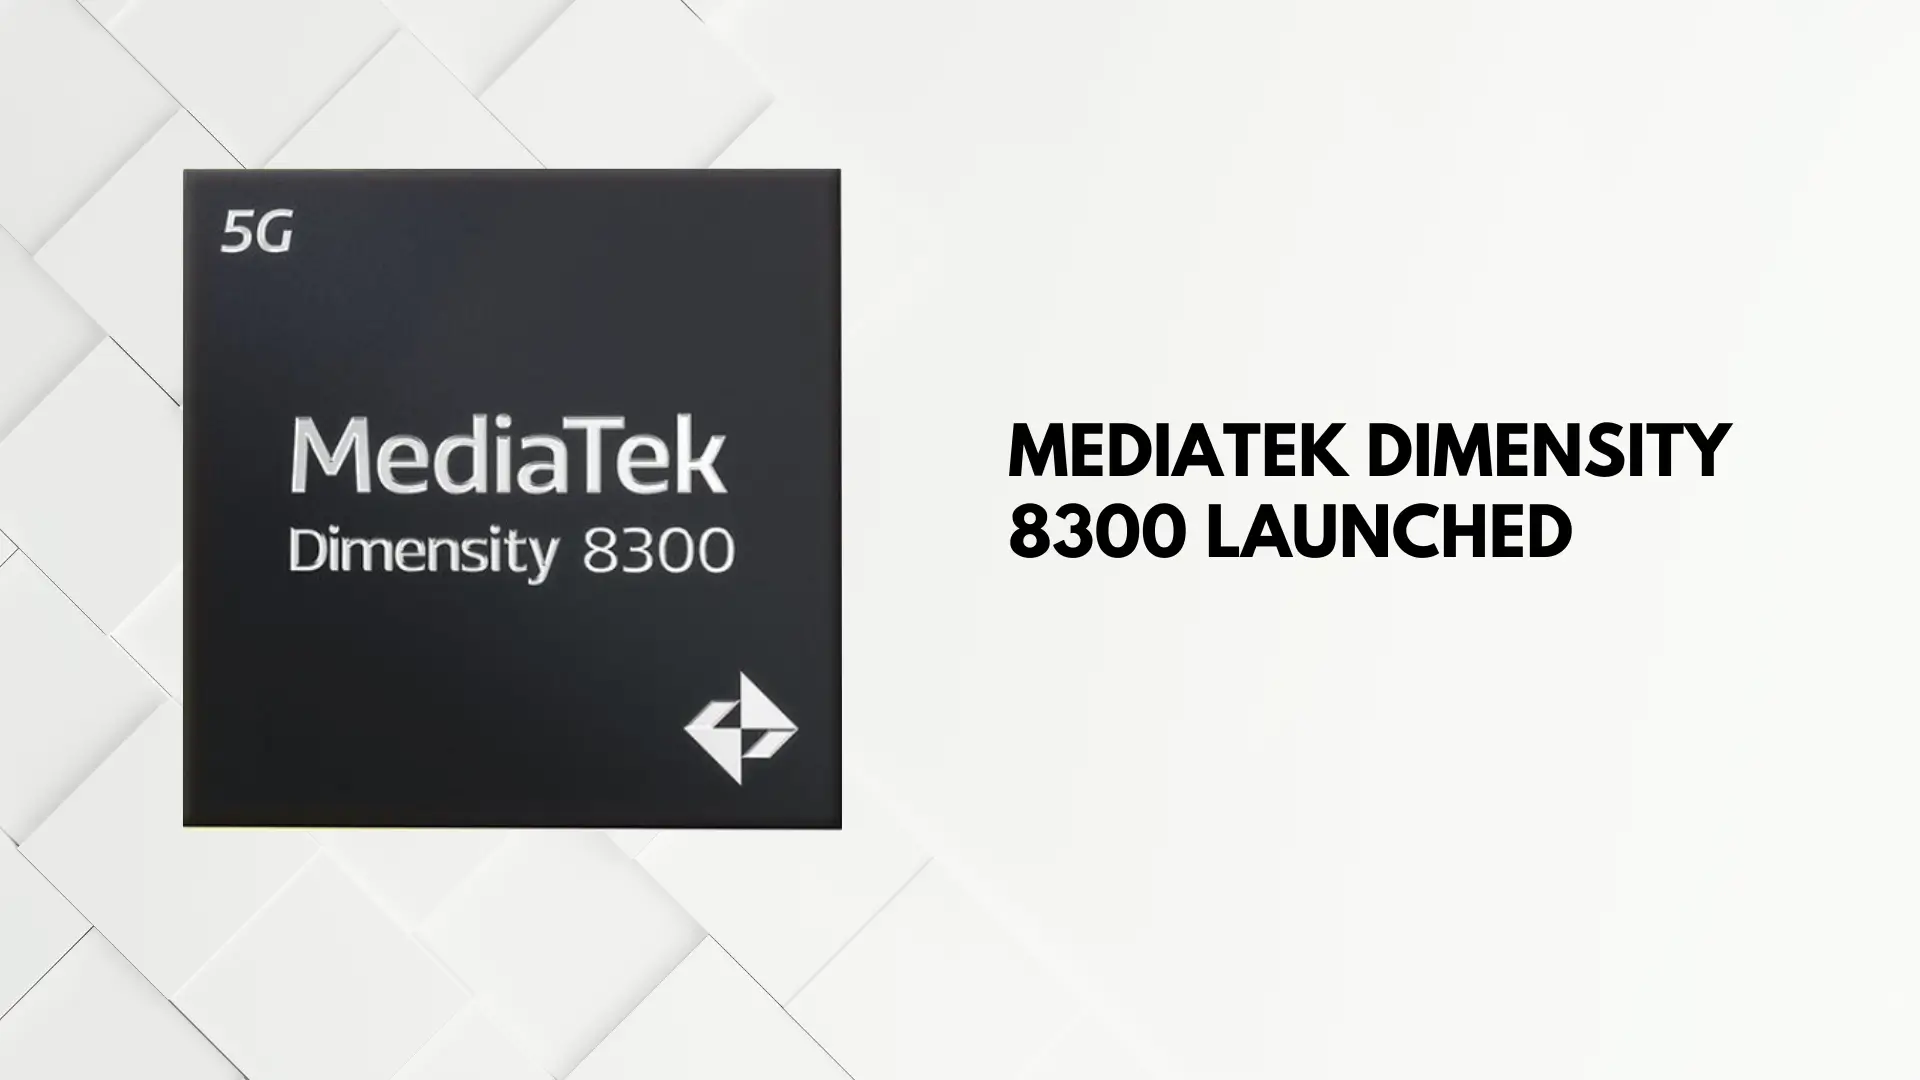 MediaTek launches Dimensity 8300: Brings AI capabilities to premium mid-range